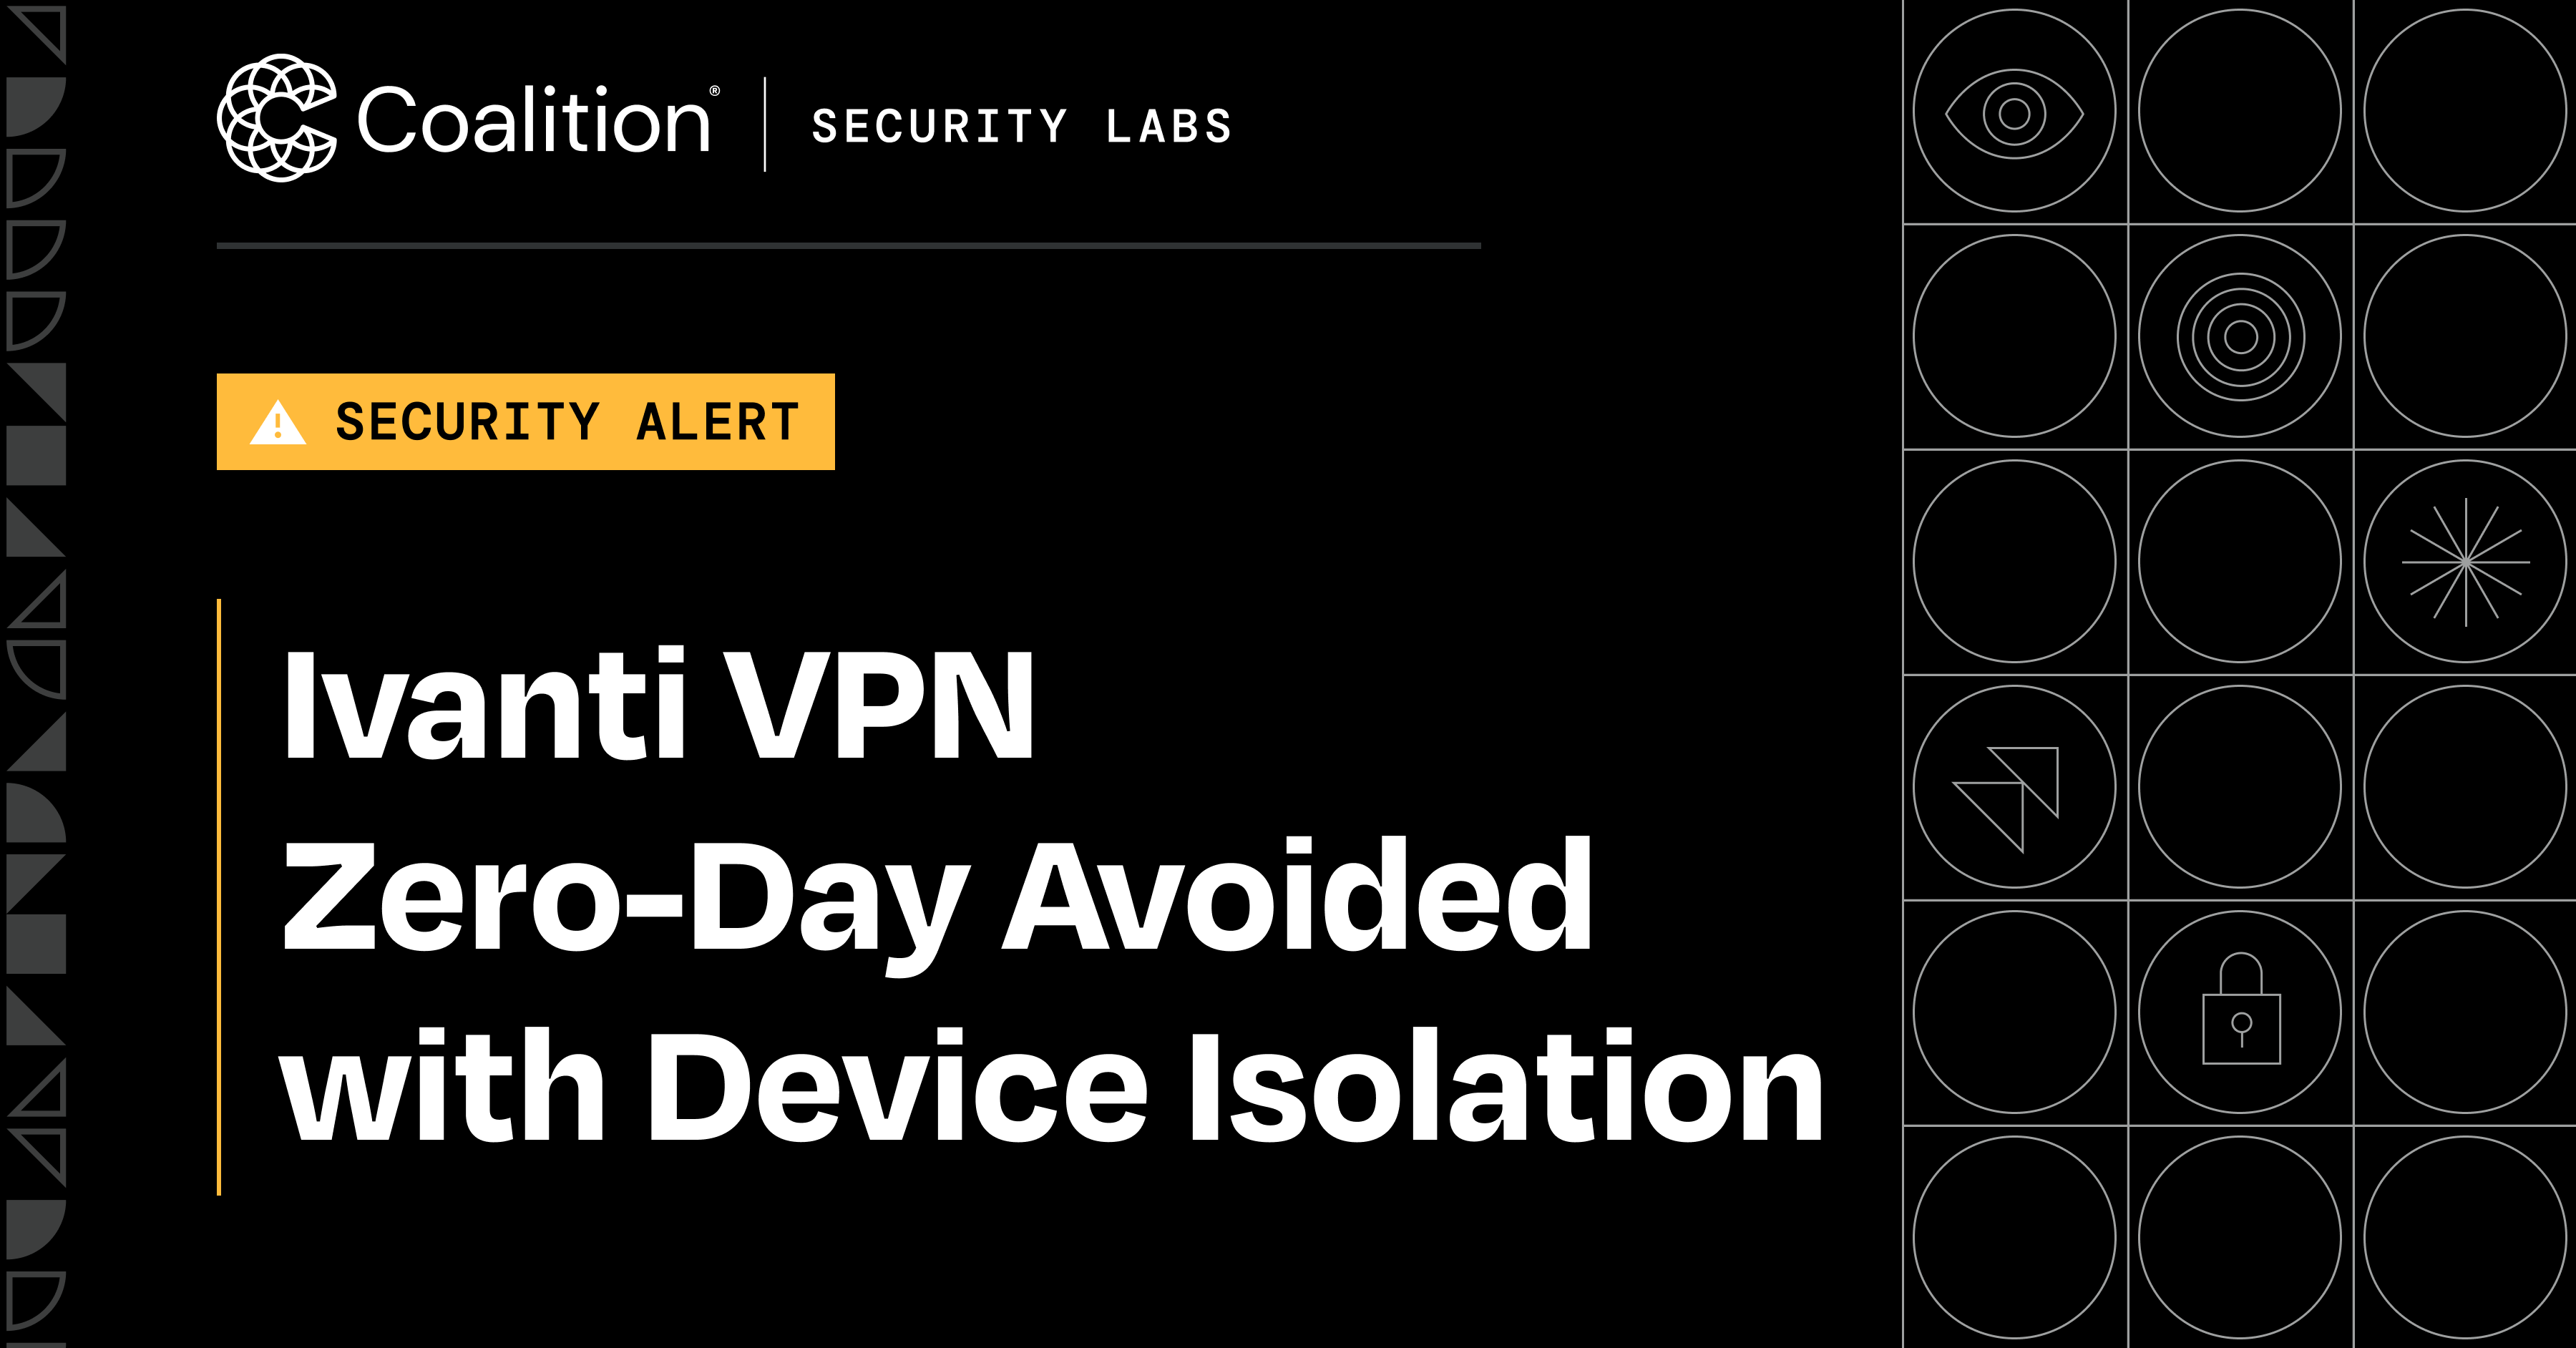 Blog: Security Alert: Ivanti VPN Zero-Day Avoided with Device Isolation